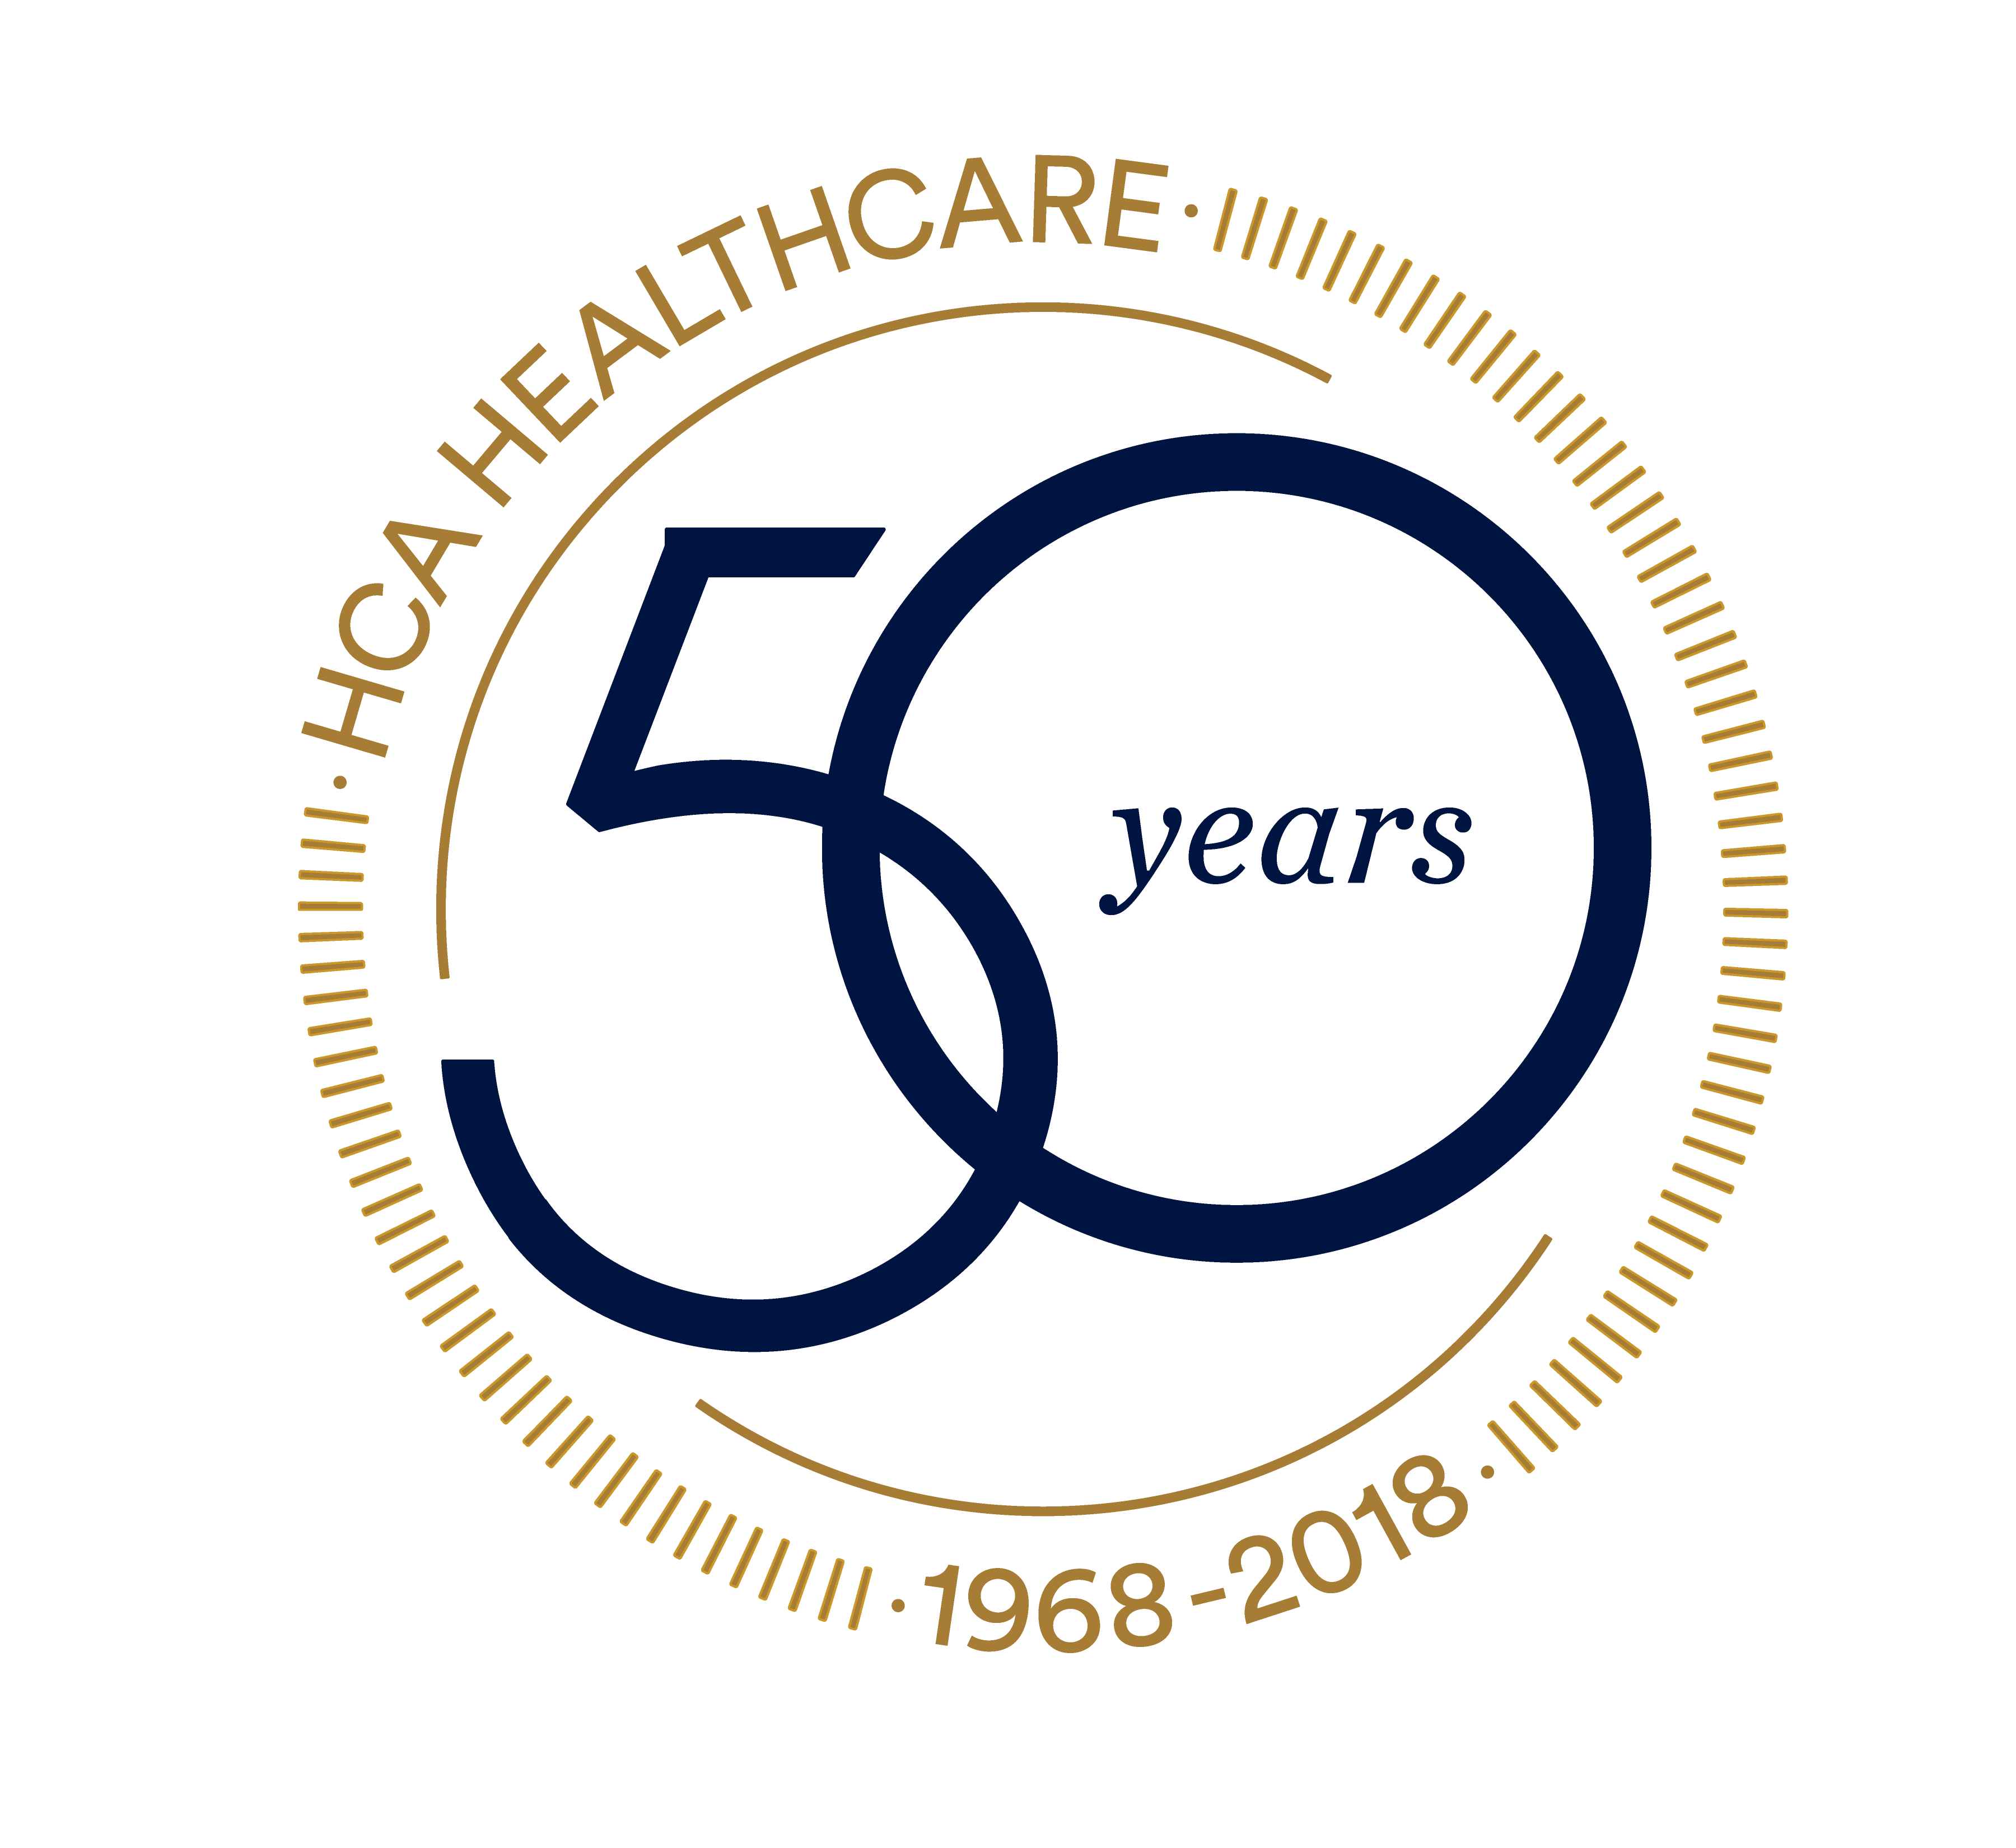 HCA Healthcare 50 years 1968-2018